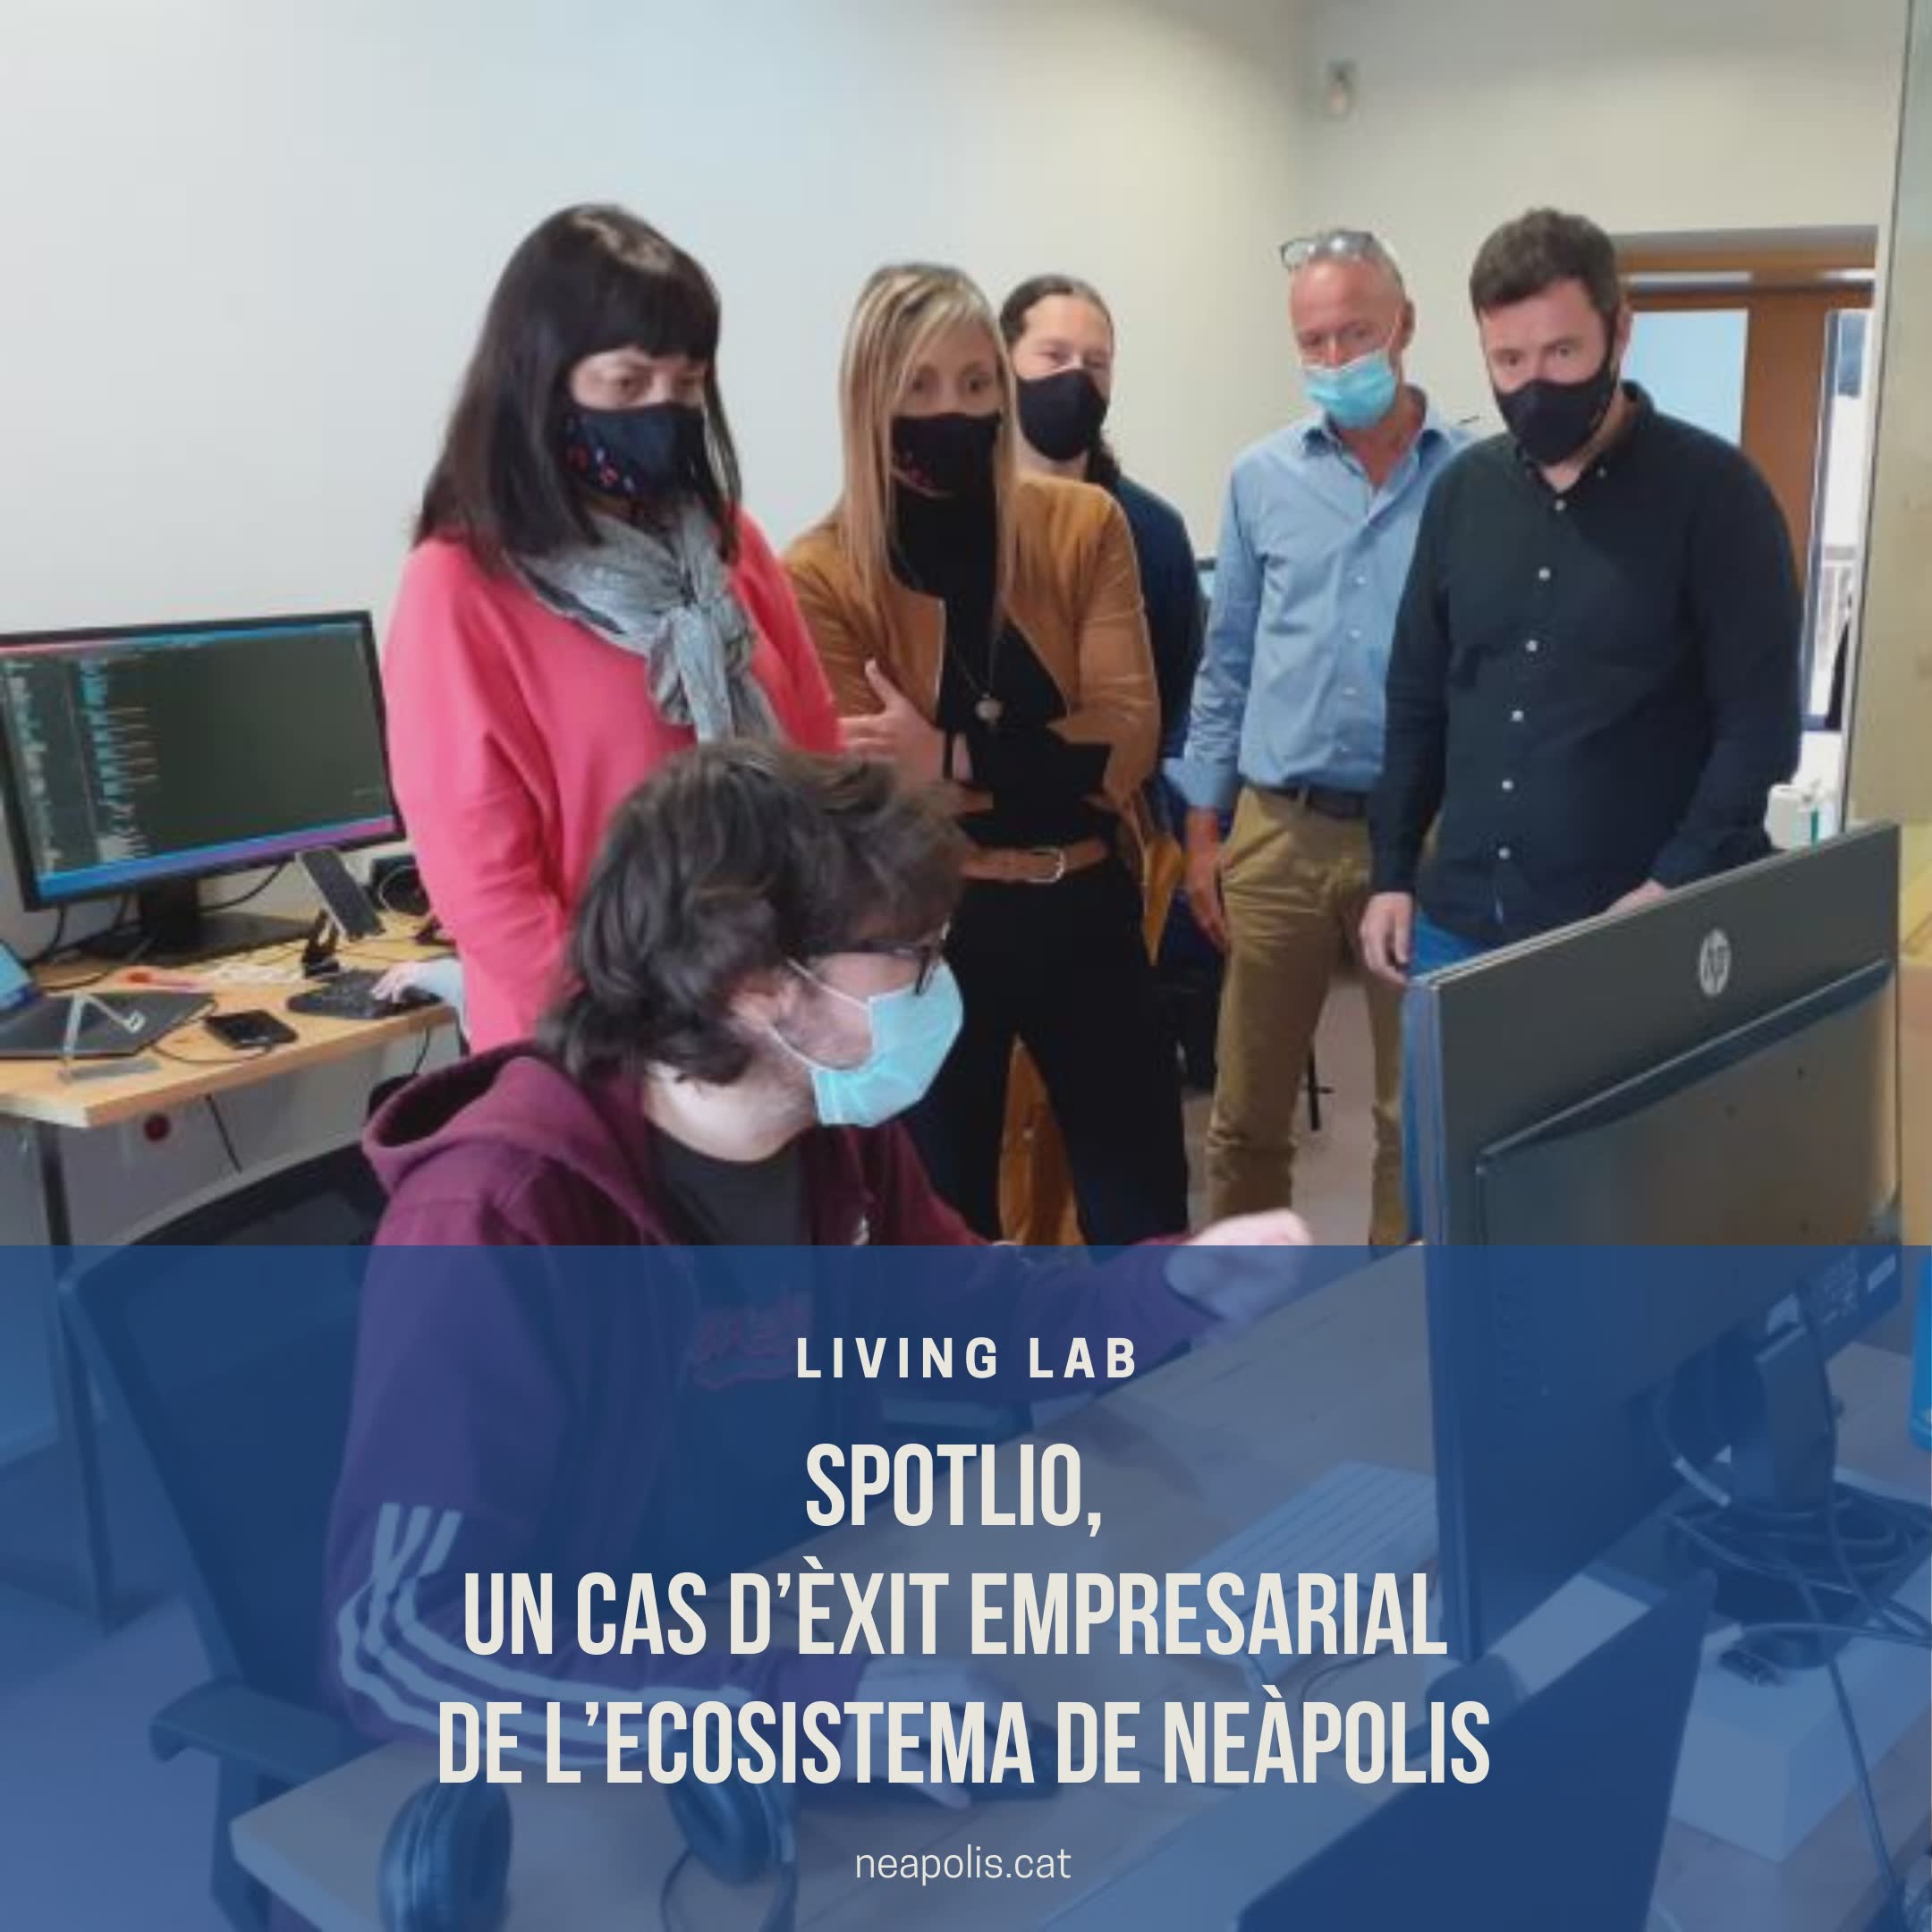 Spotlio, a business success story of the Neàpolis ecosystem